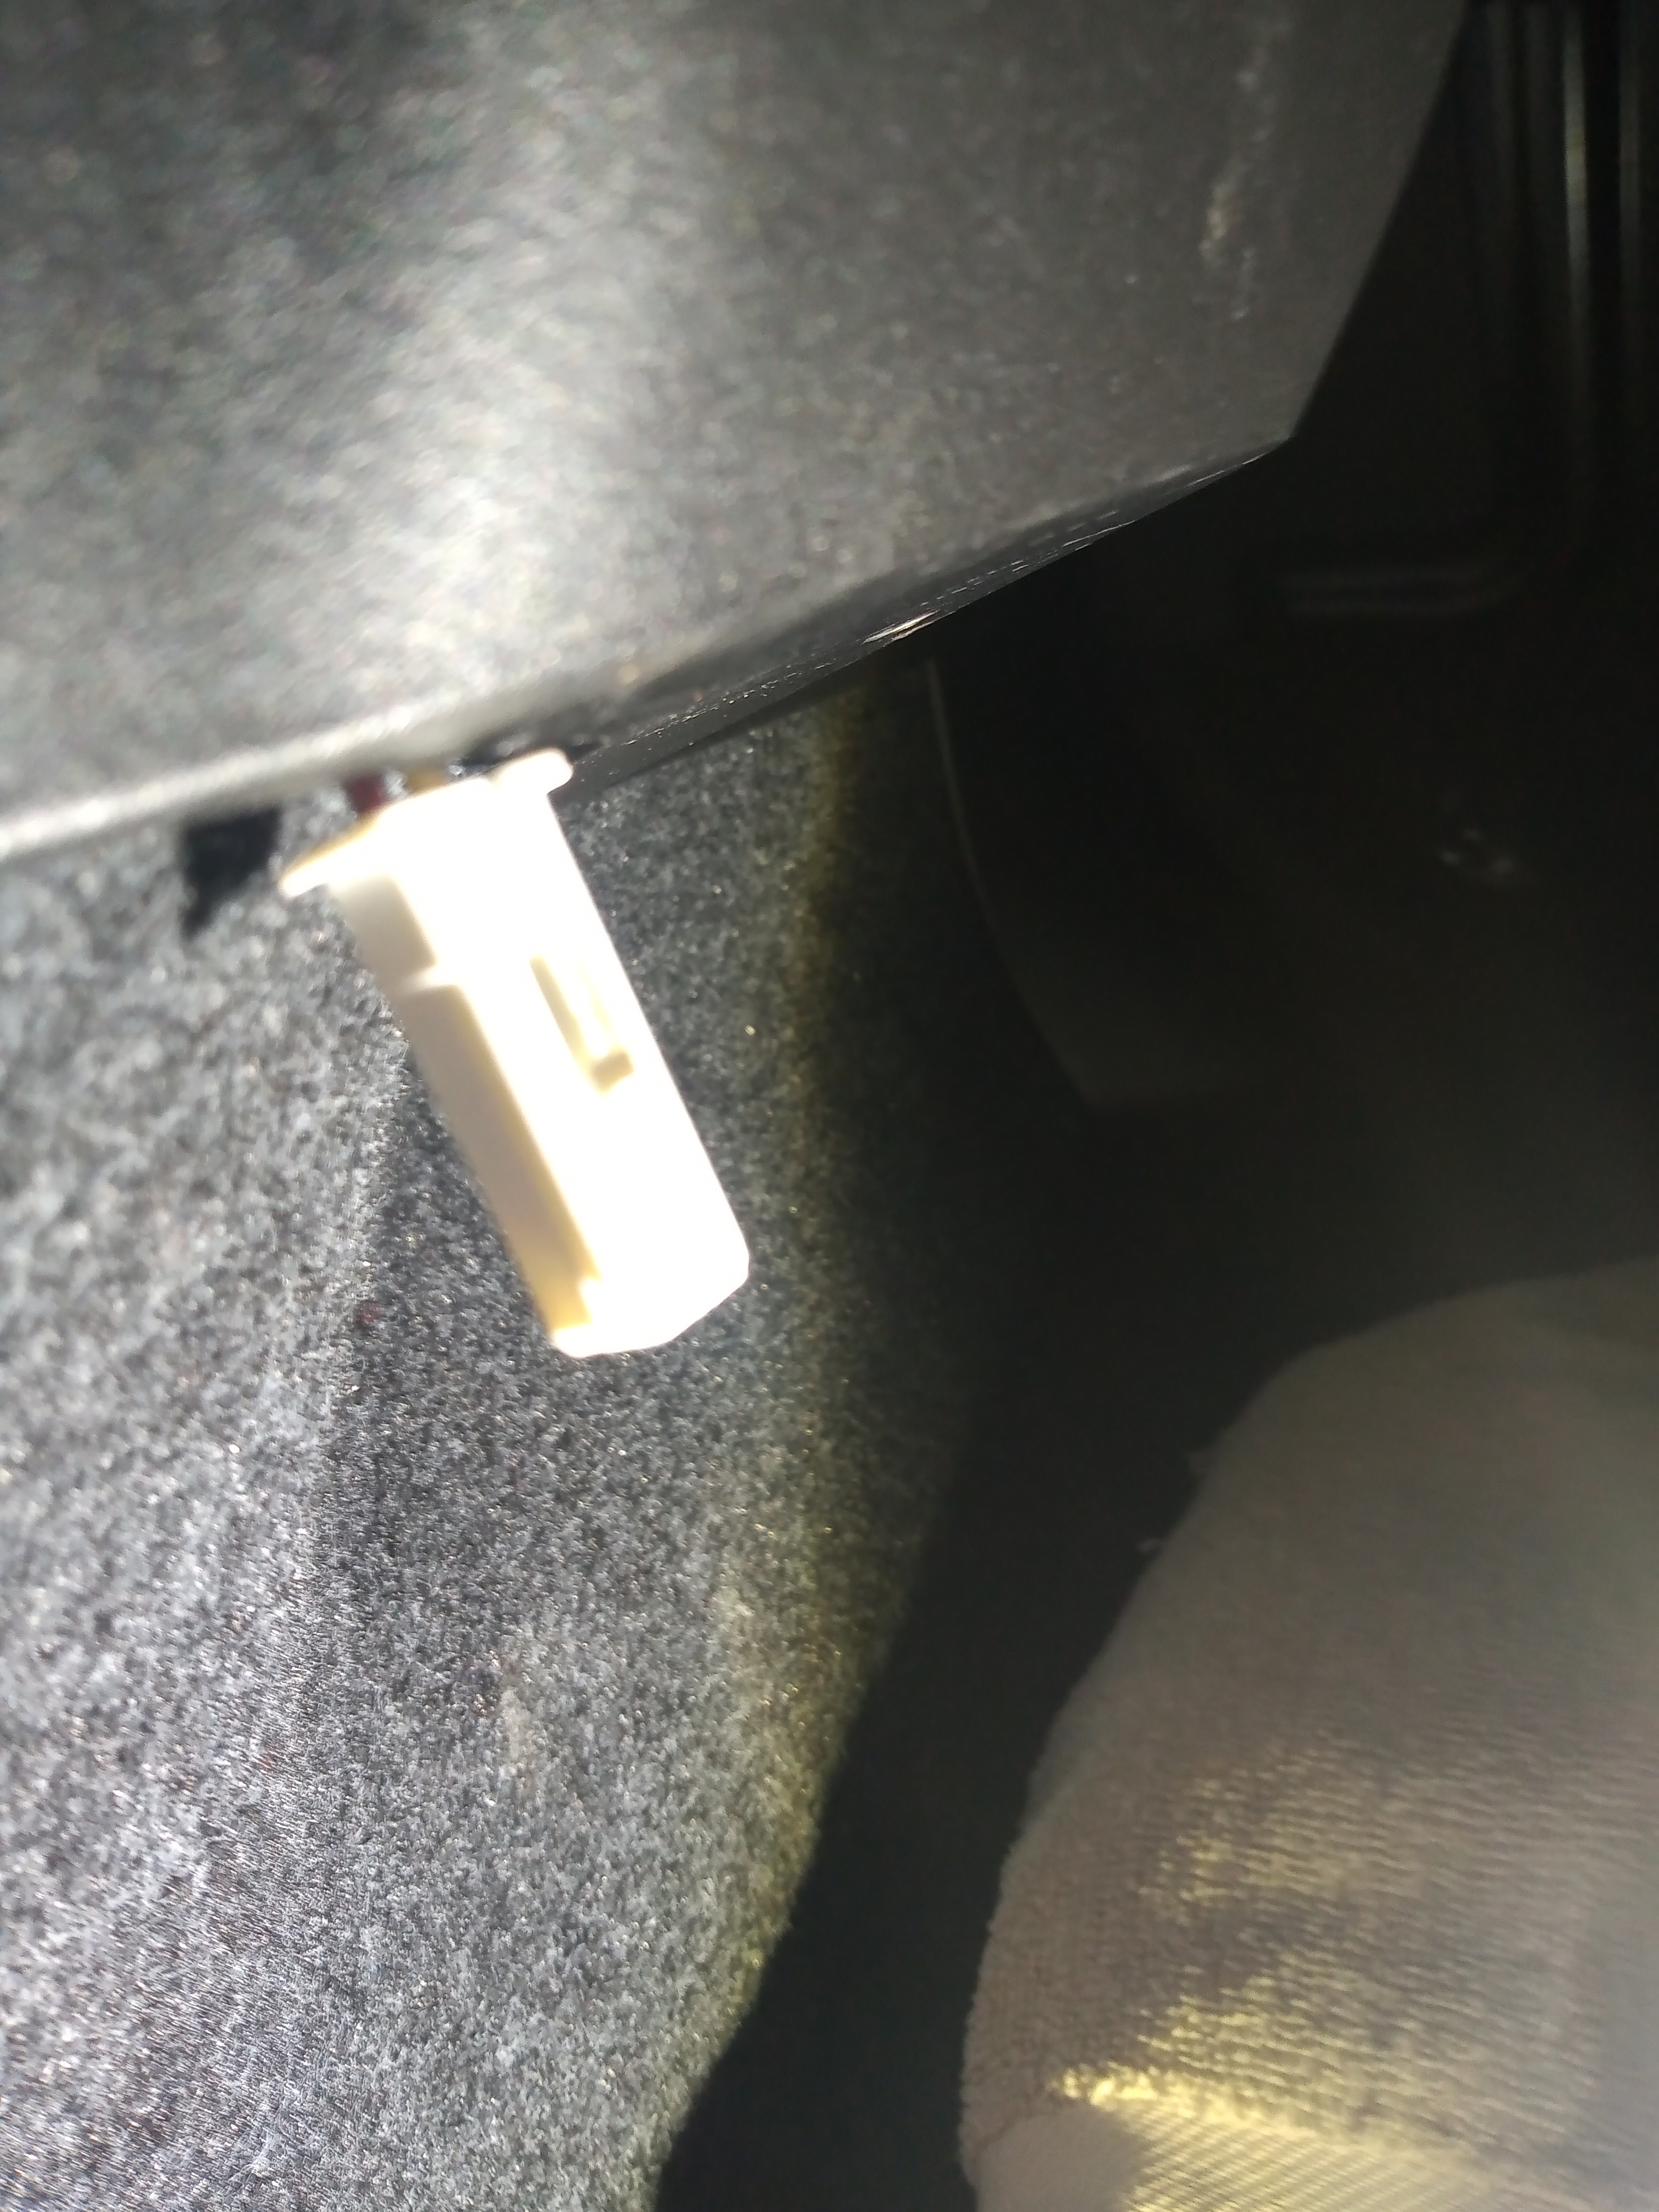 Fiat Panda trunk tailgate handle rear door button trim with lock cut